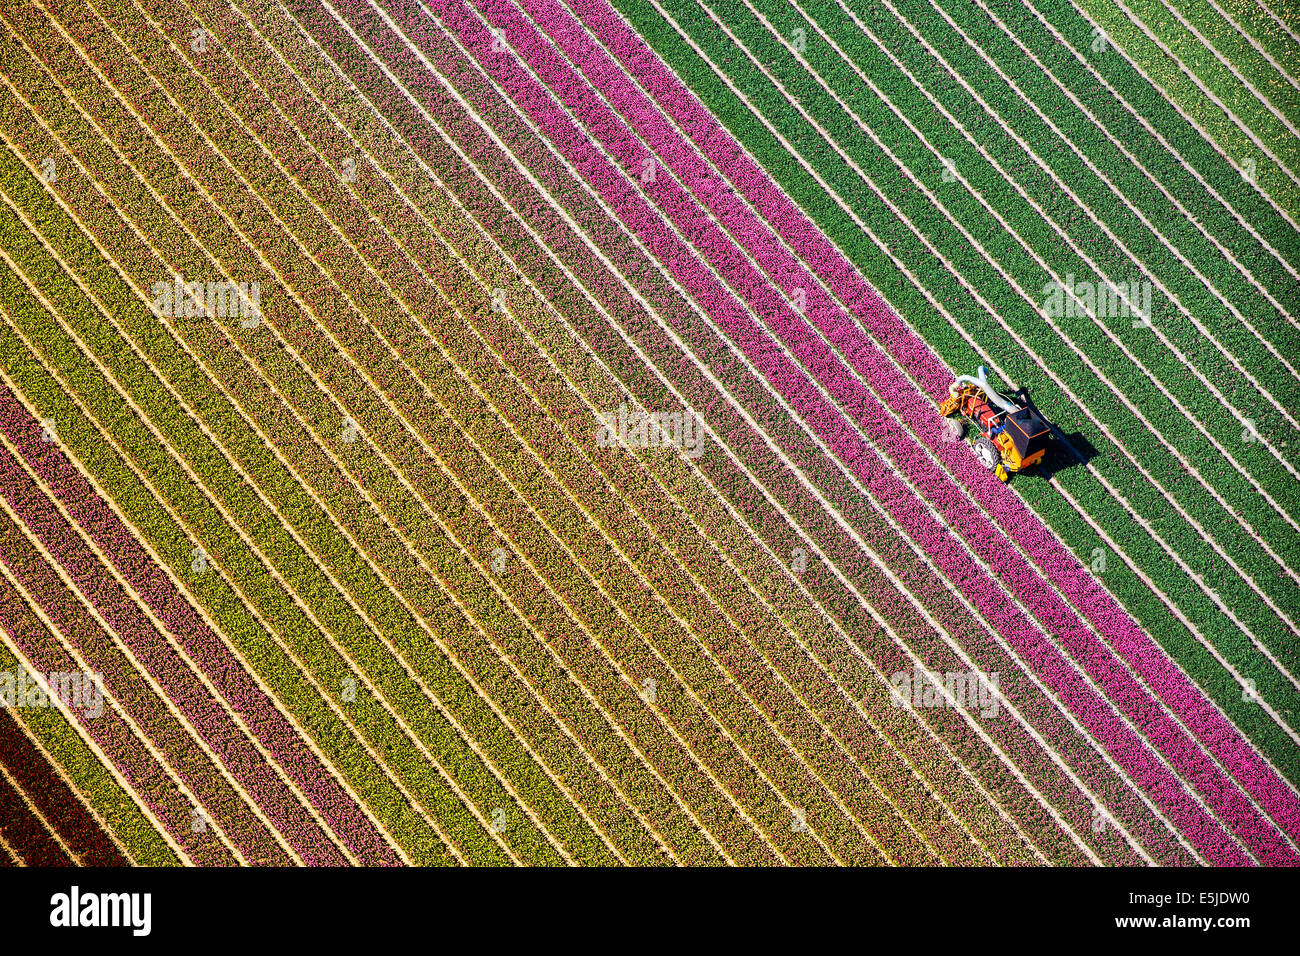 Niederlande, Burgervlotbrug, Tulpenfelder, Landwirt Richtfest Tulpen. Luftbild Stockfoto